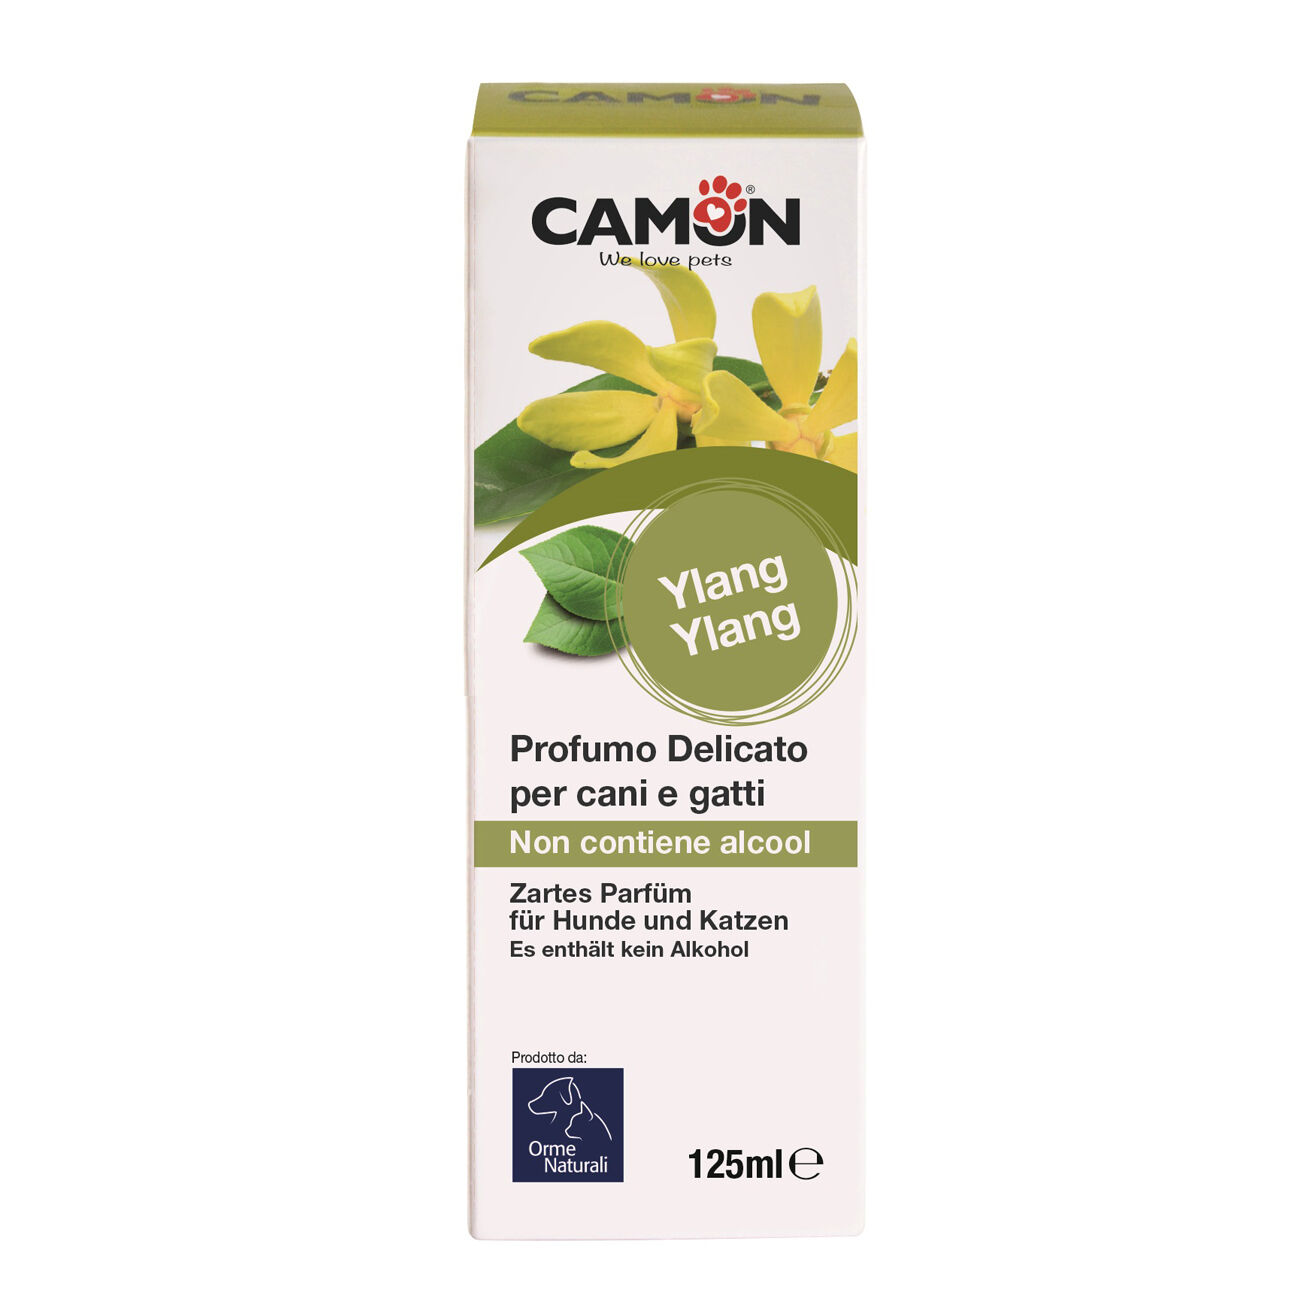 Camon-Orme-Naturali-Parfum-hunde-katzen-ohne-alkohol-Ylang-Ylang-CO-G810